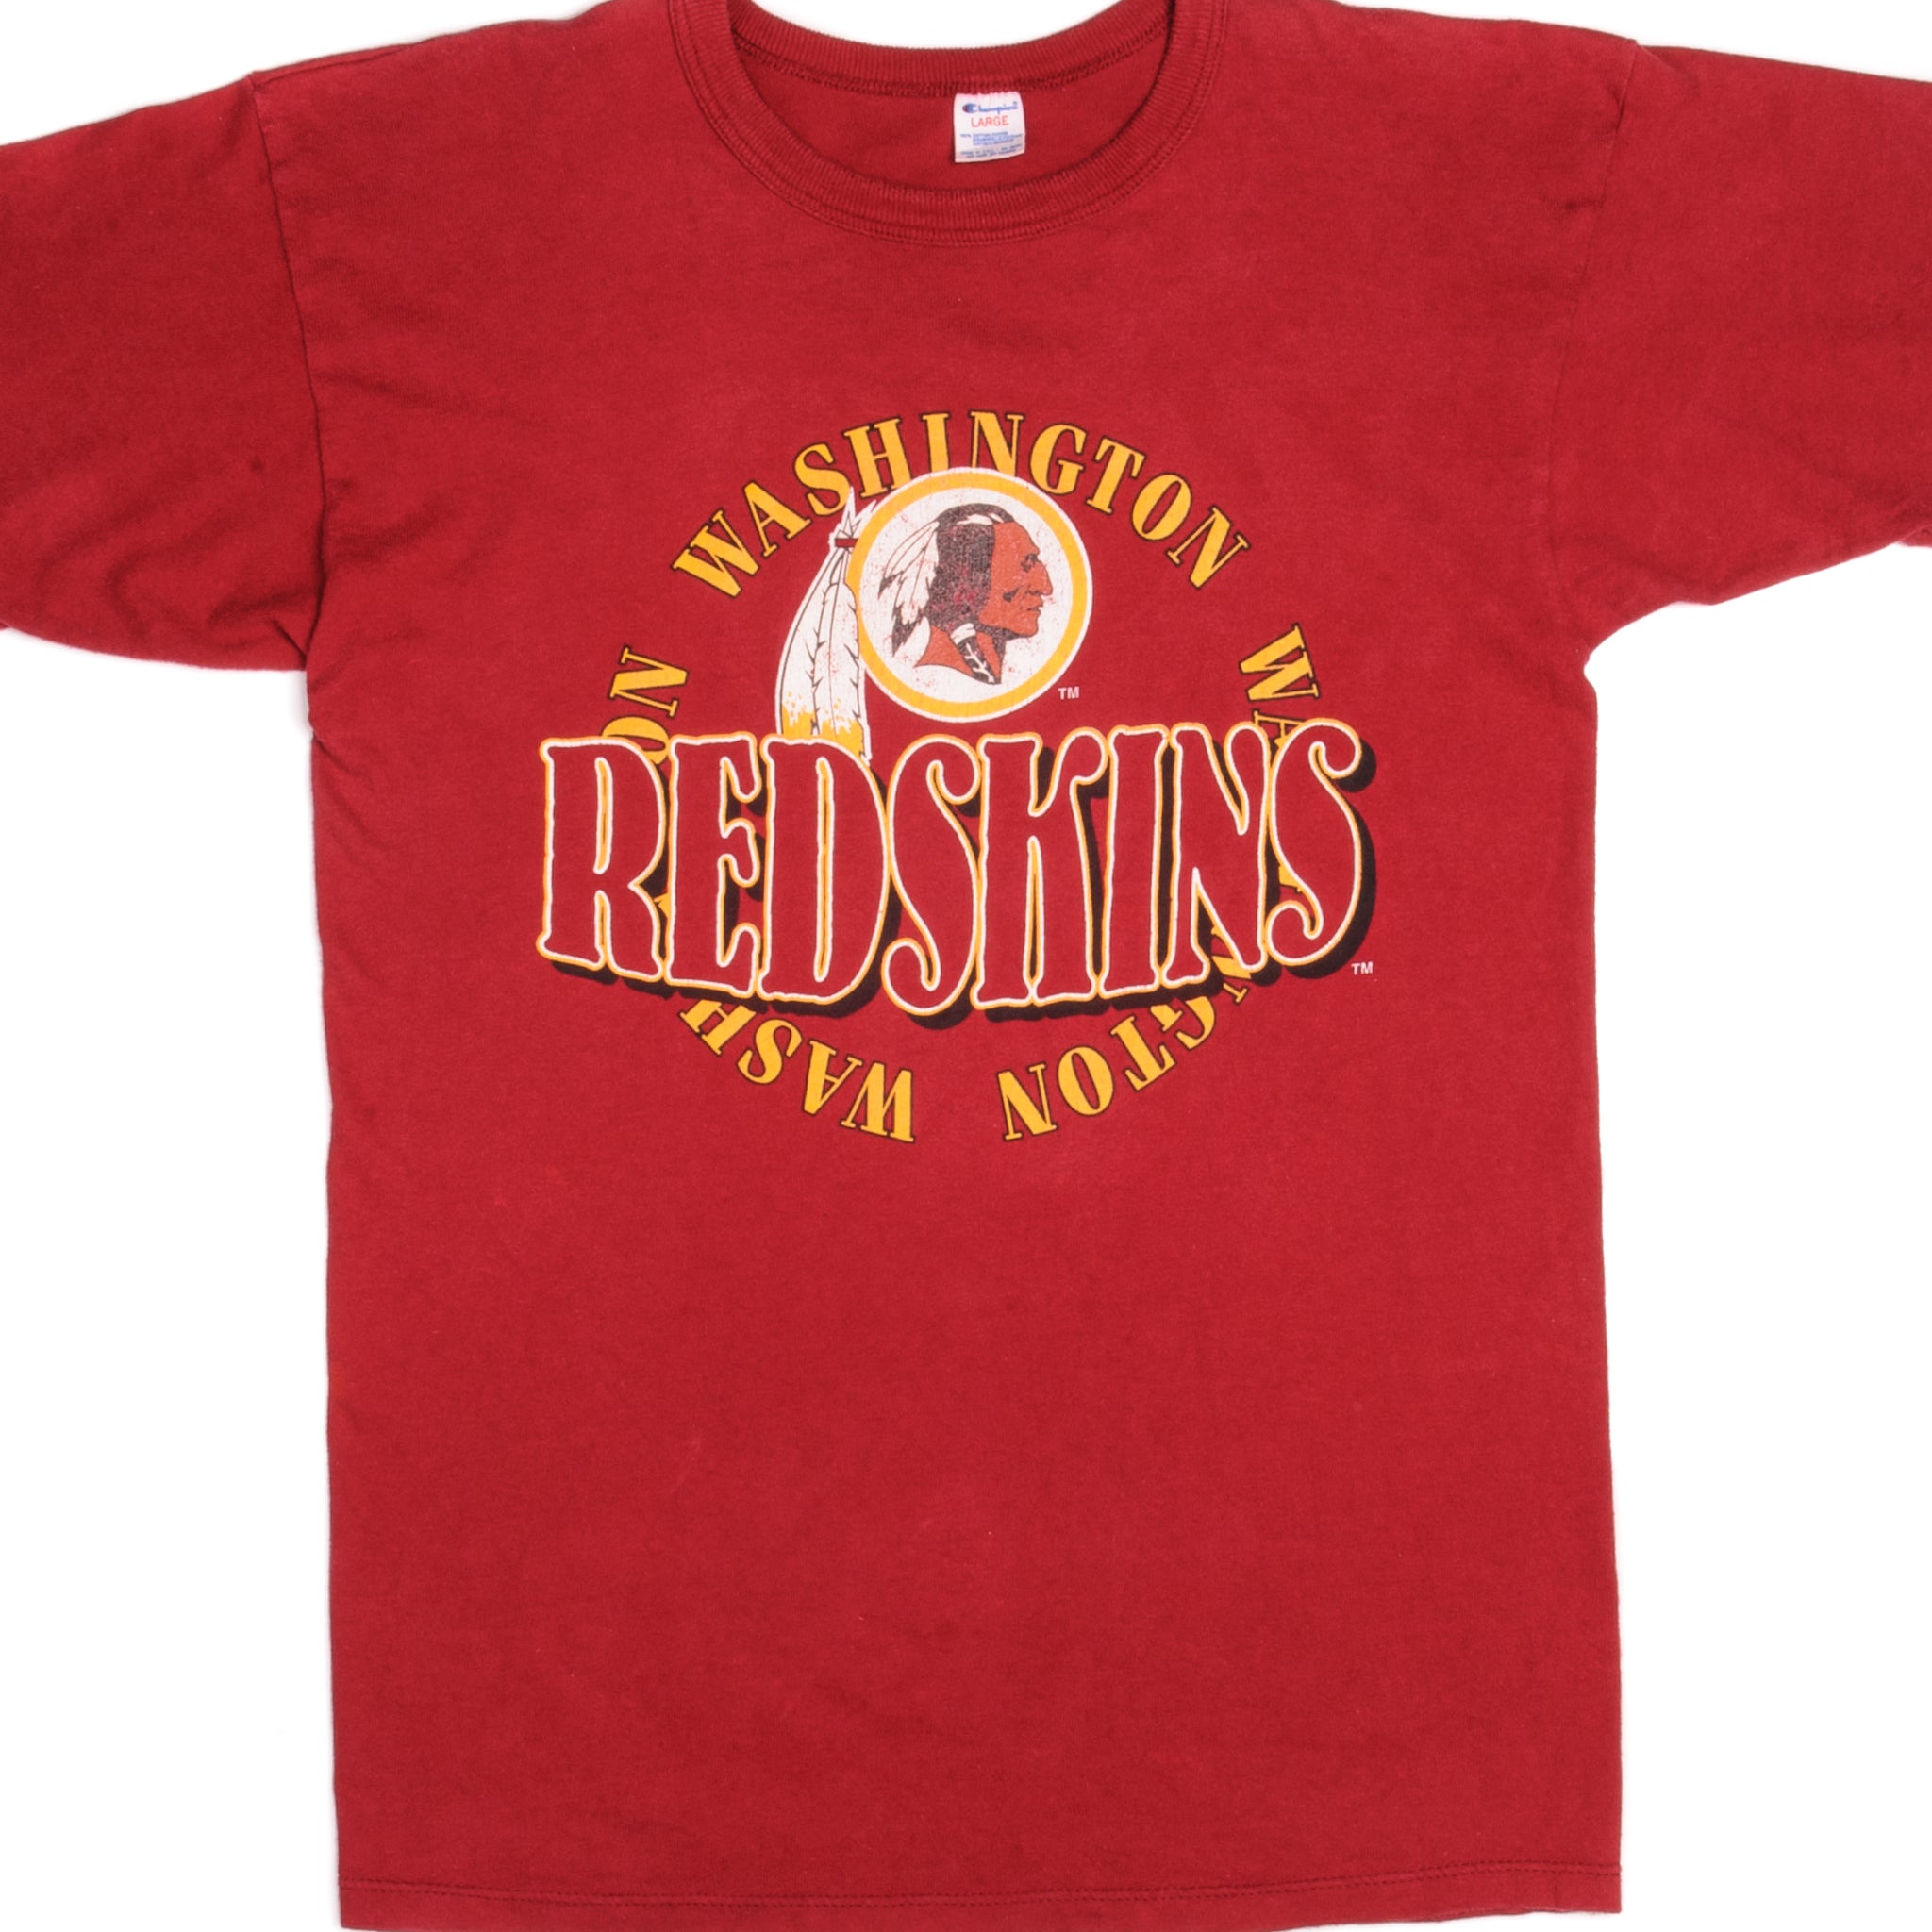 washington redskins vintage shirt